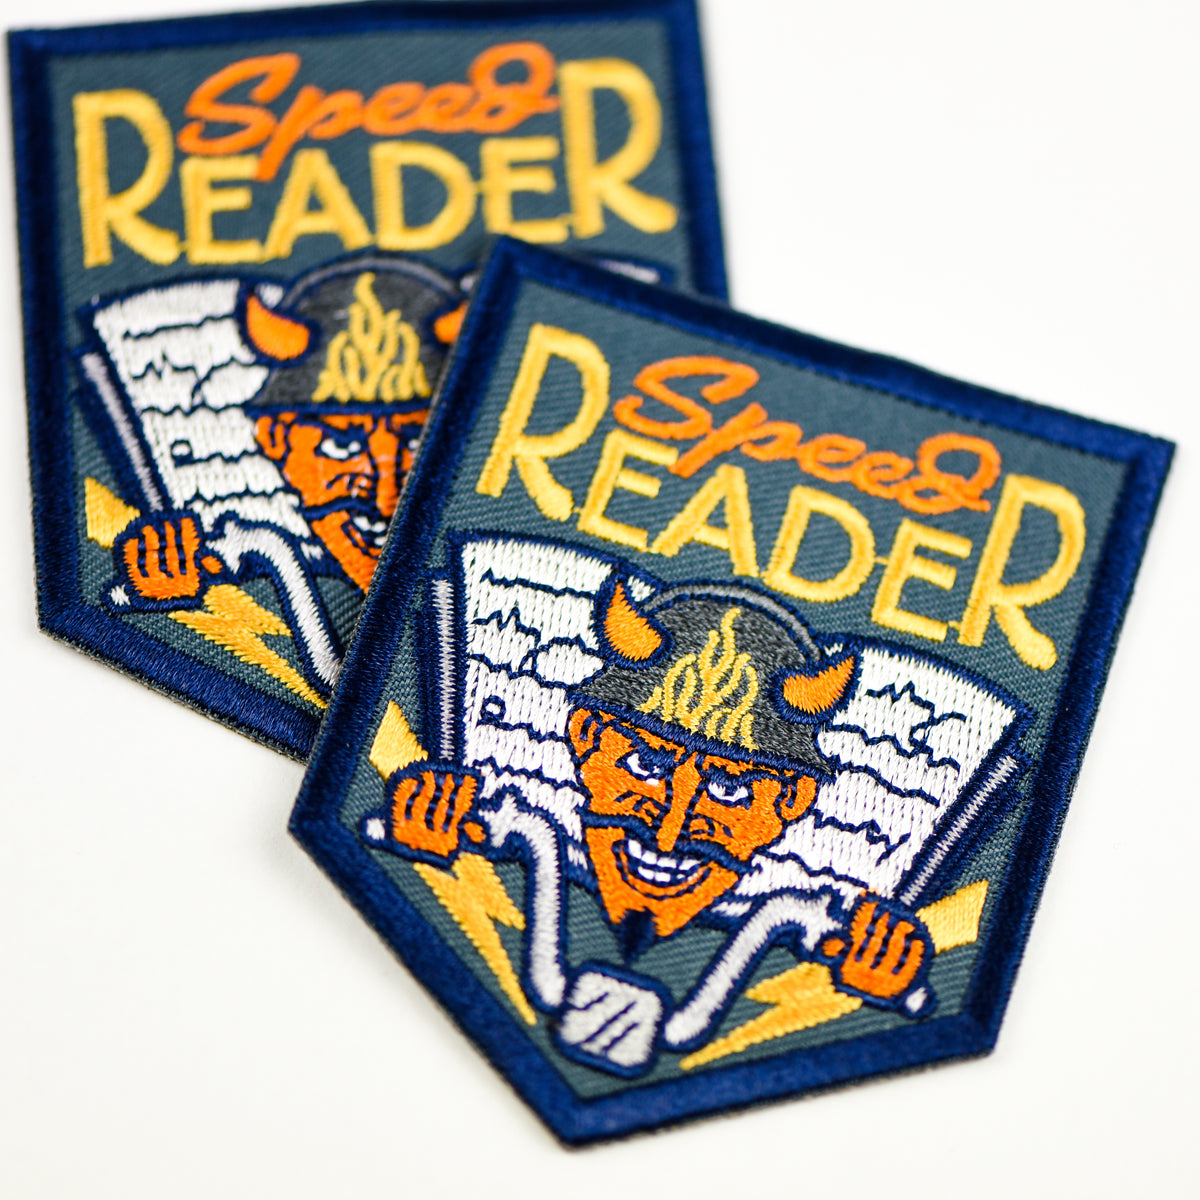 Speed Reader Patch is dark blue with orange and yellow &quot;Speed Reader&quot; and a orange faced devil on a bike with a book behind him